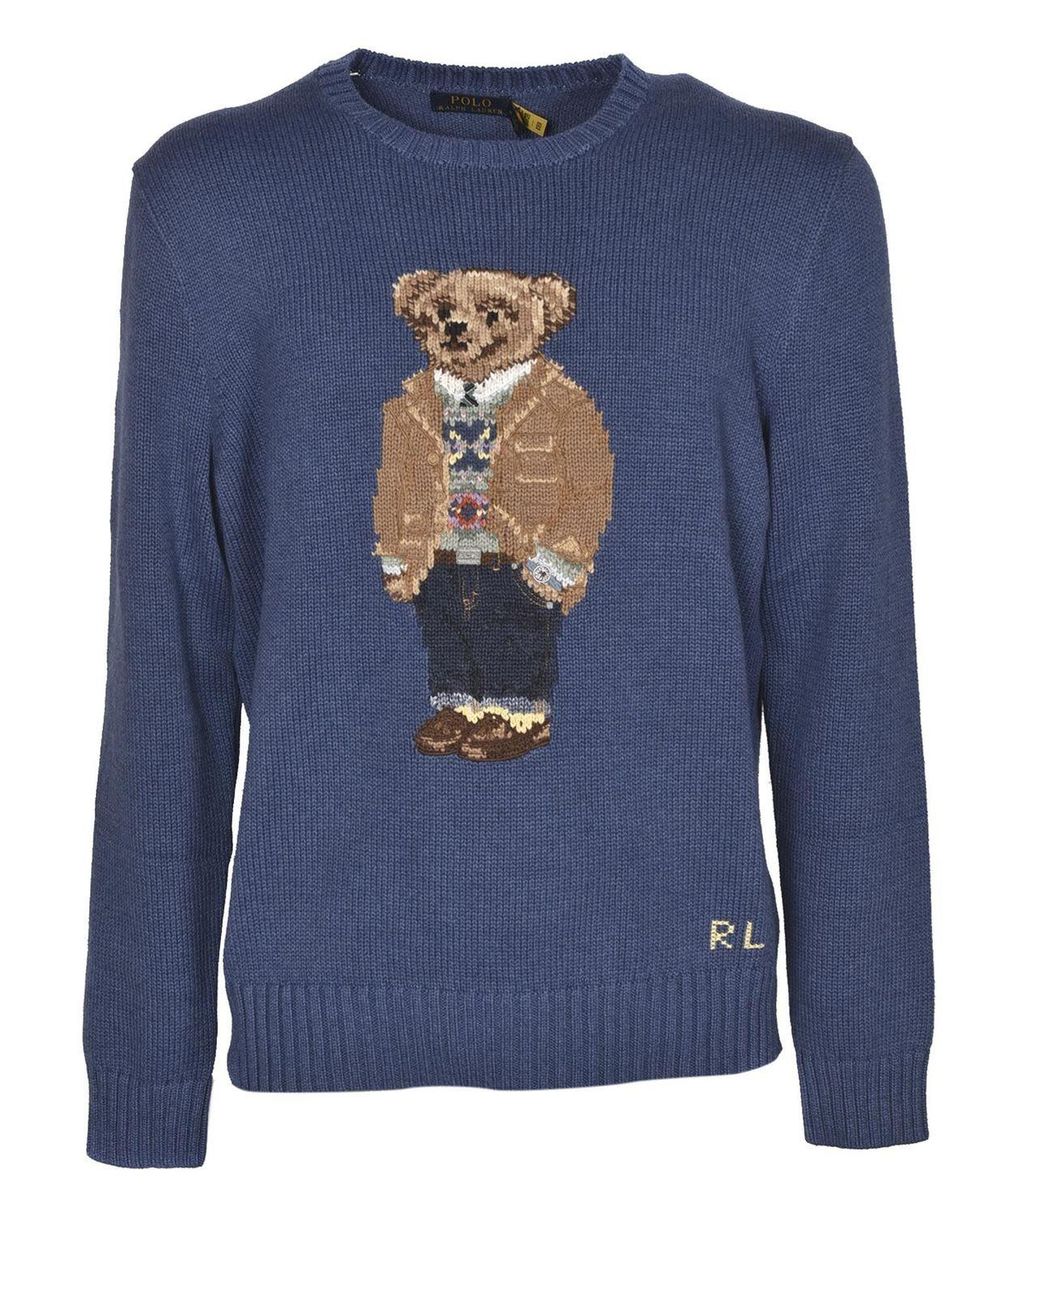 Polo Ralph Lauren Cotton Teddy Sweater In Rustic Blue for Men - Lyst